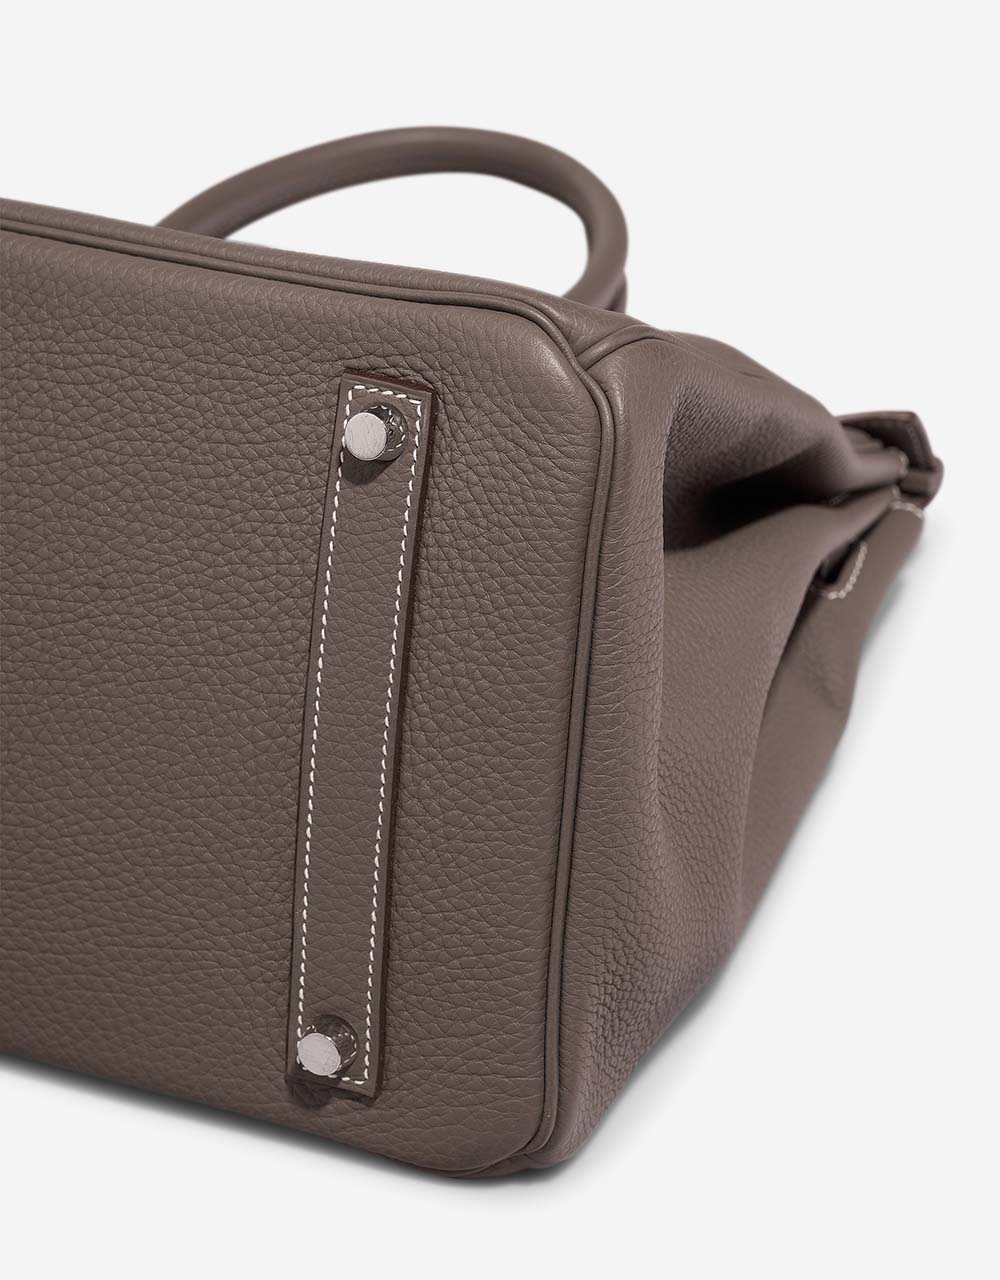 Hermès Birkin 35 Etoupe signs of wear| Sell your designer bag on Saclab.com